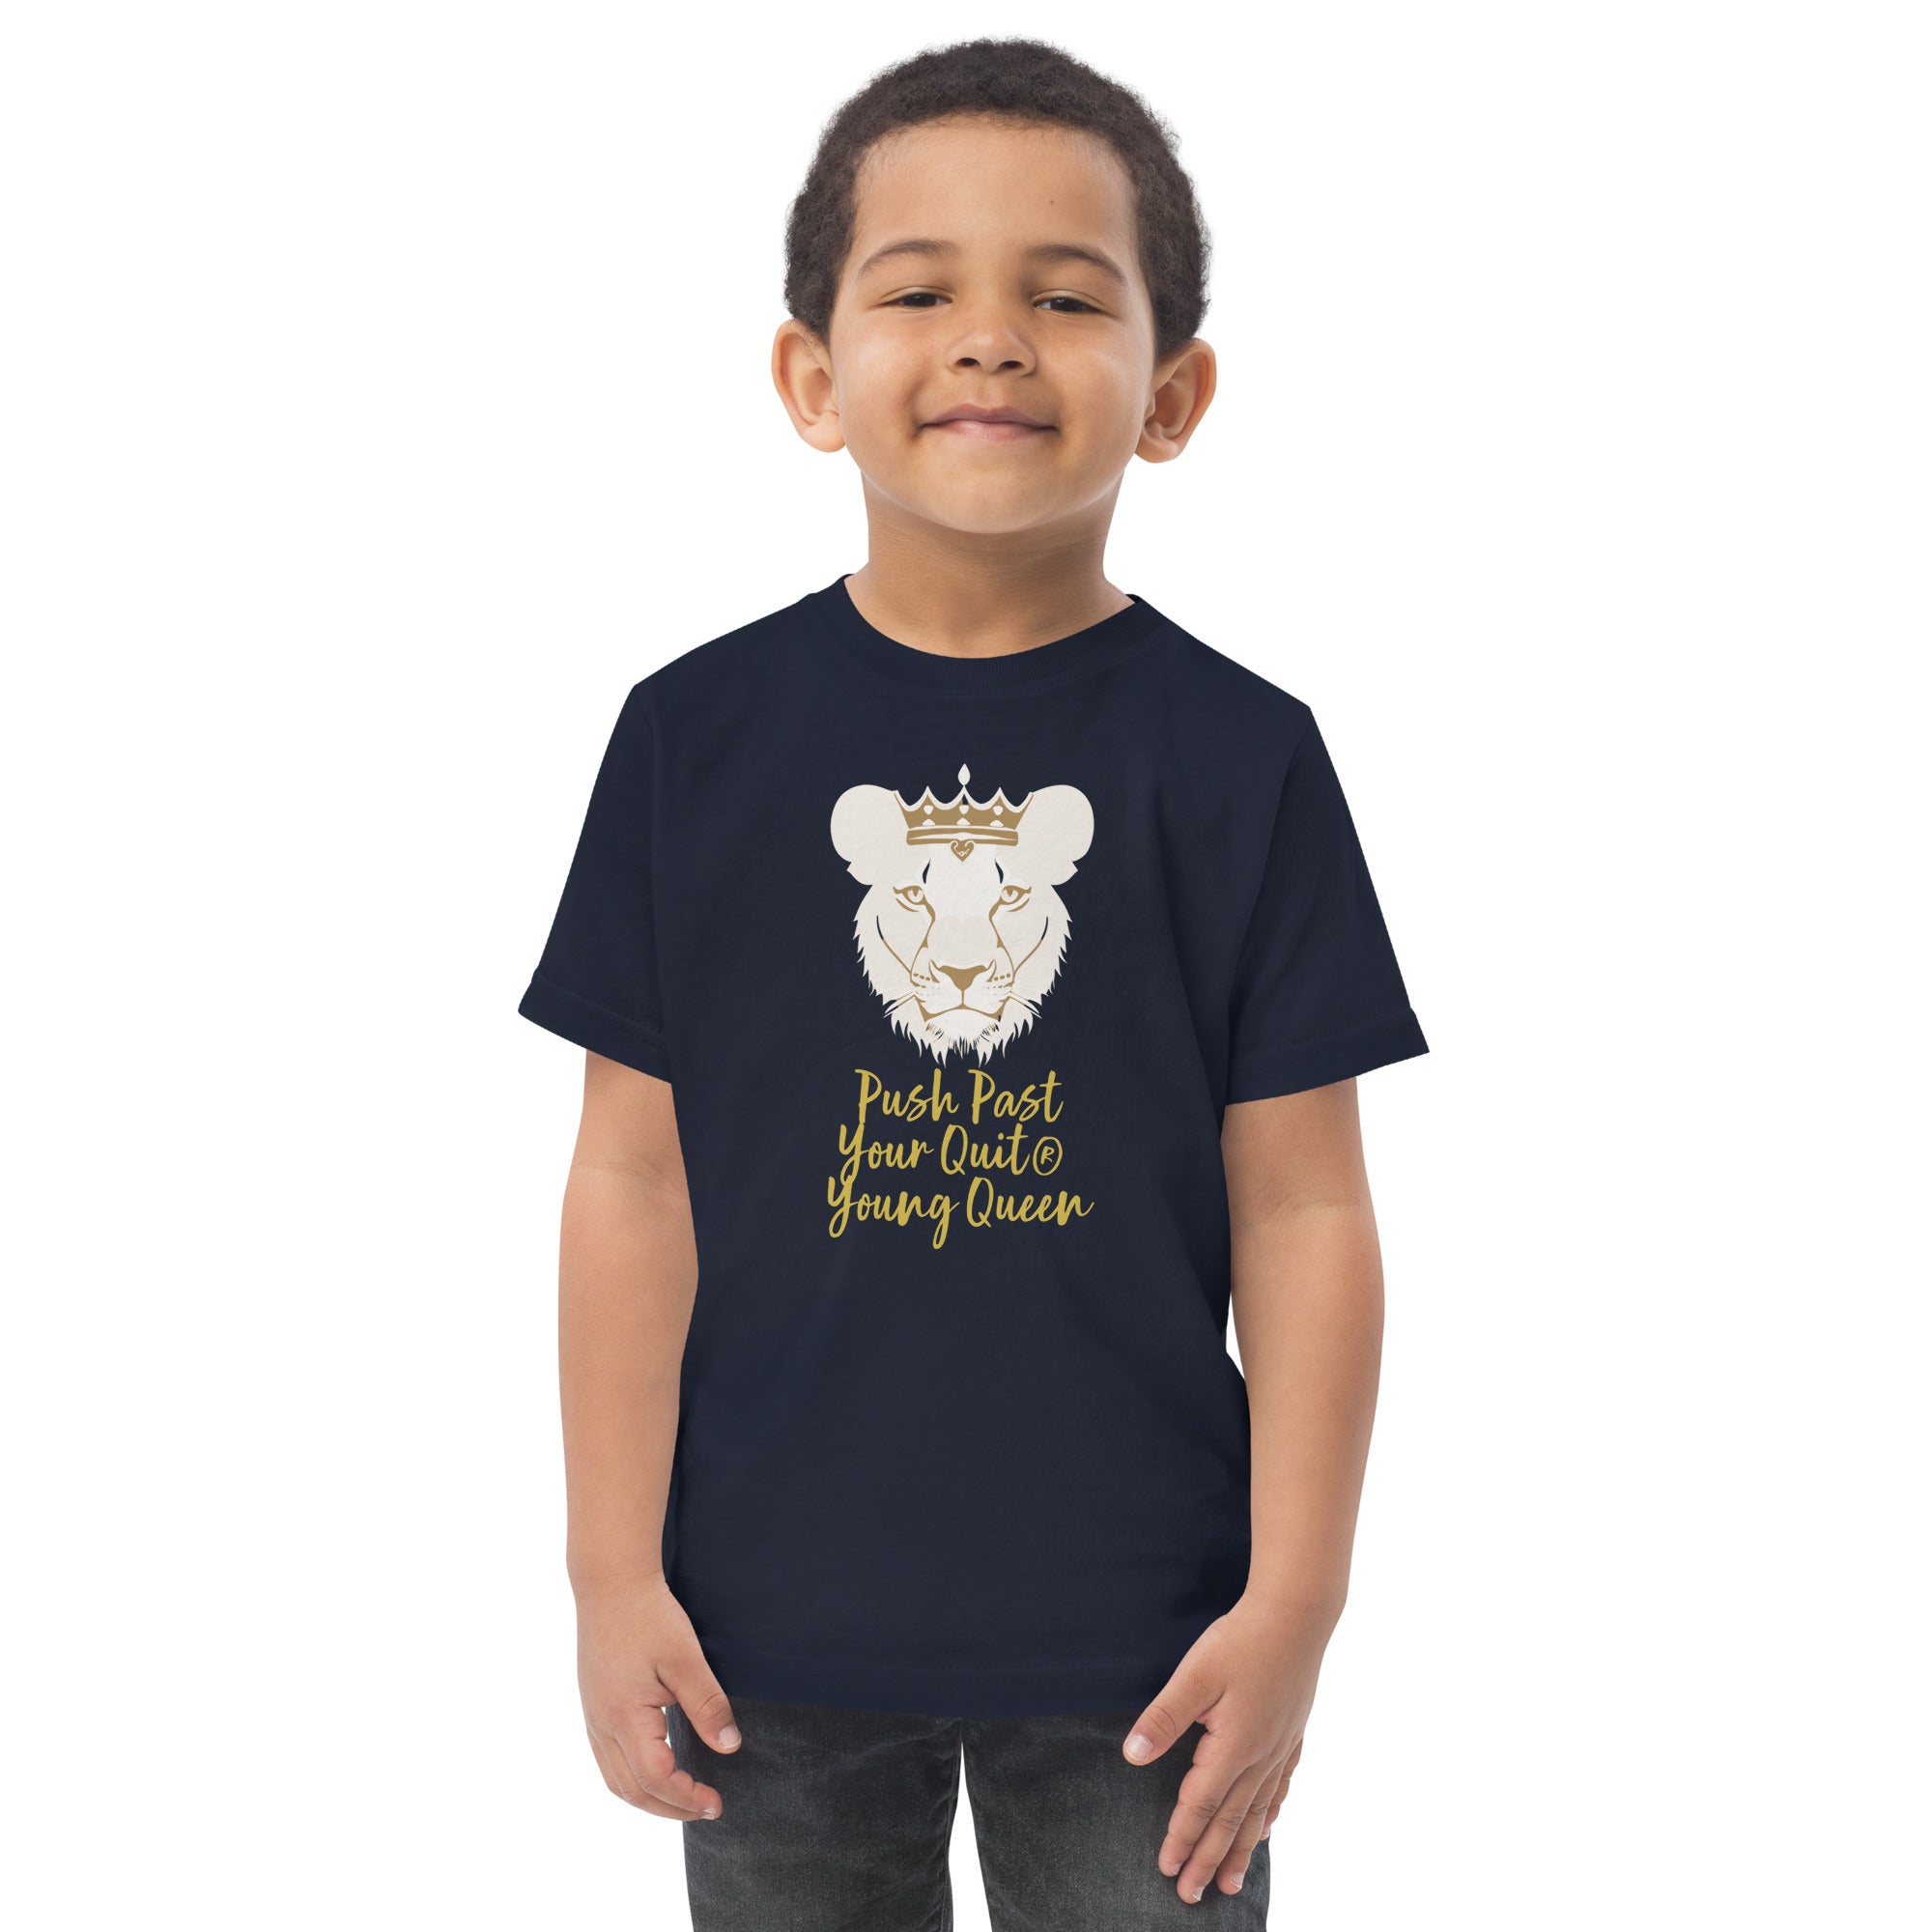 Young Queen Toddler jersey t-shirt